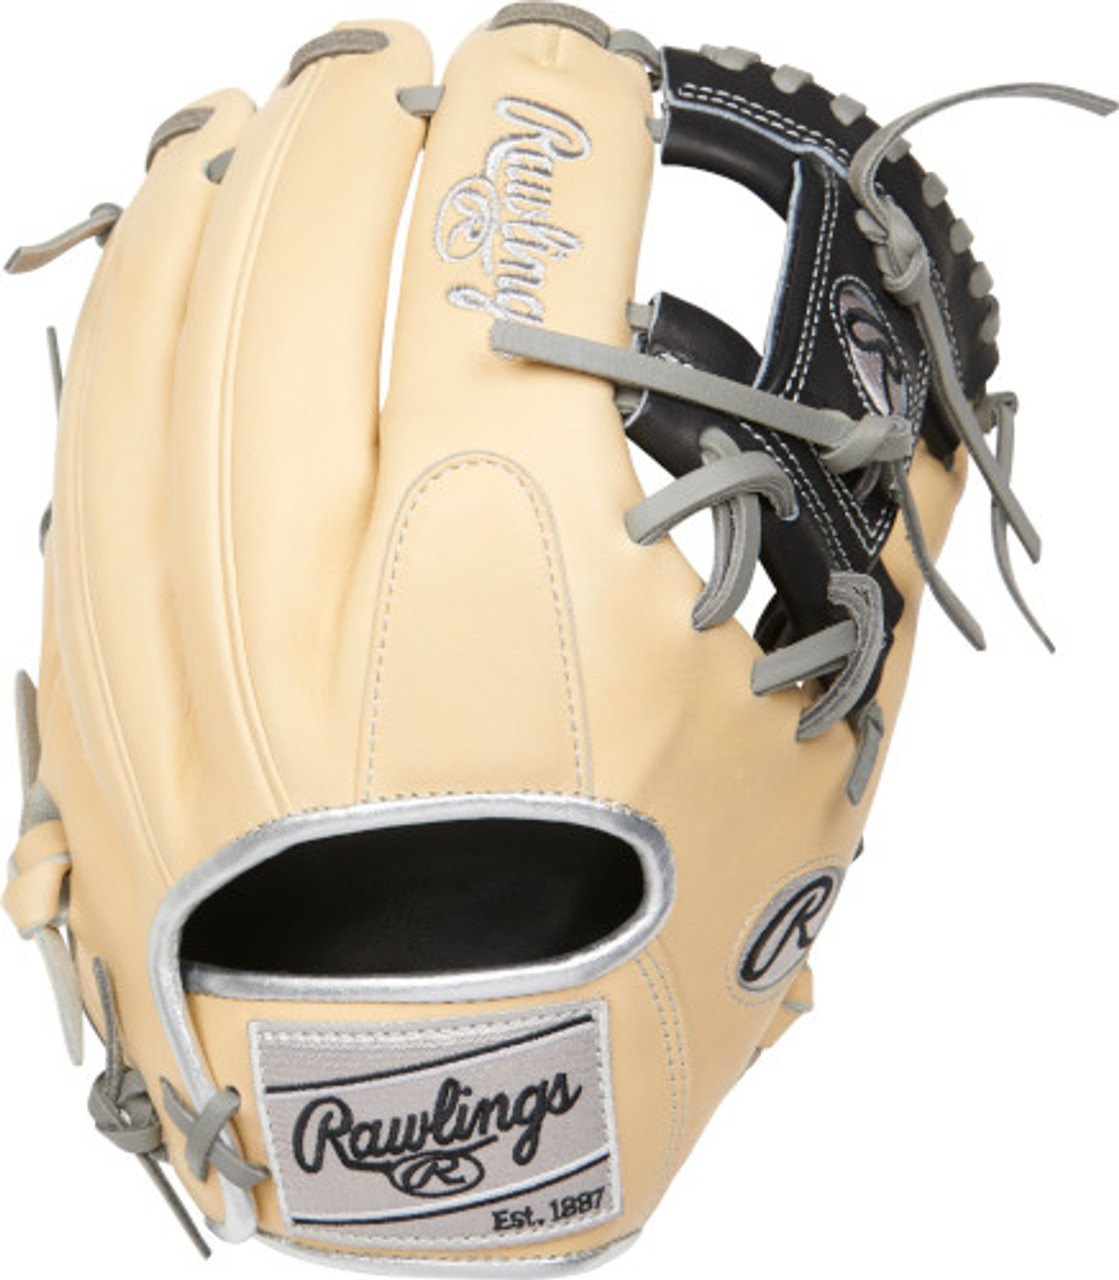 Rawlings Pro Preferred Francisco Lindor 11.75 Game Day Baseball Glove